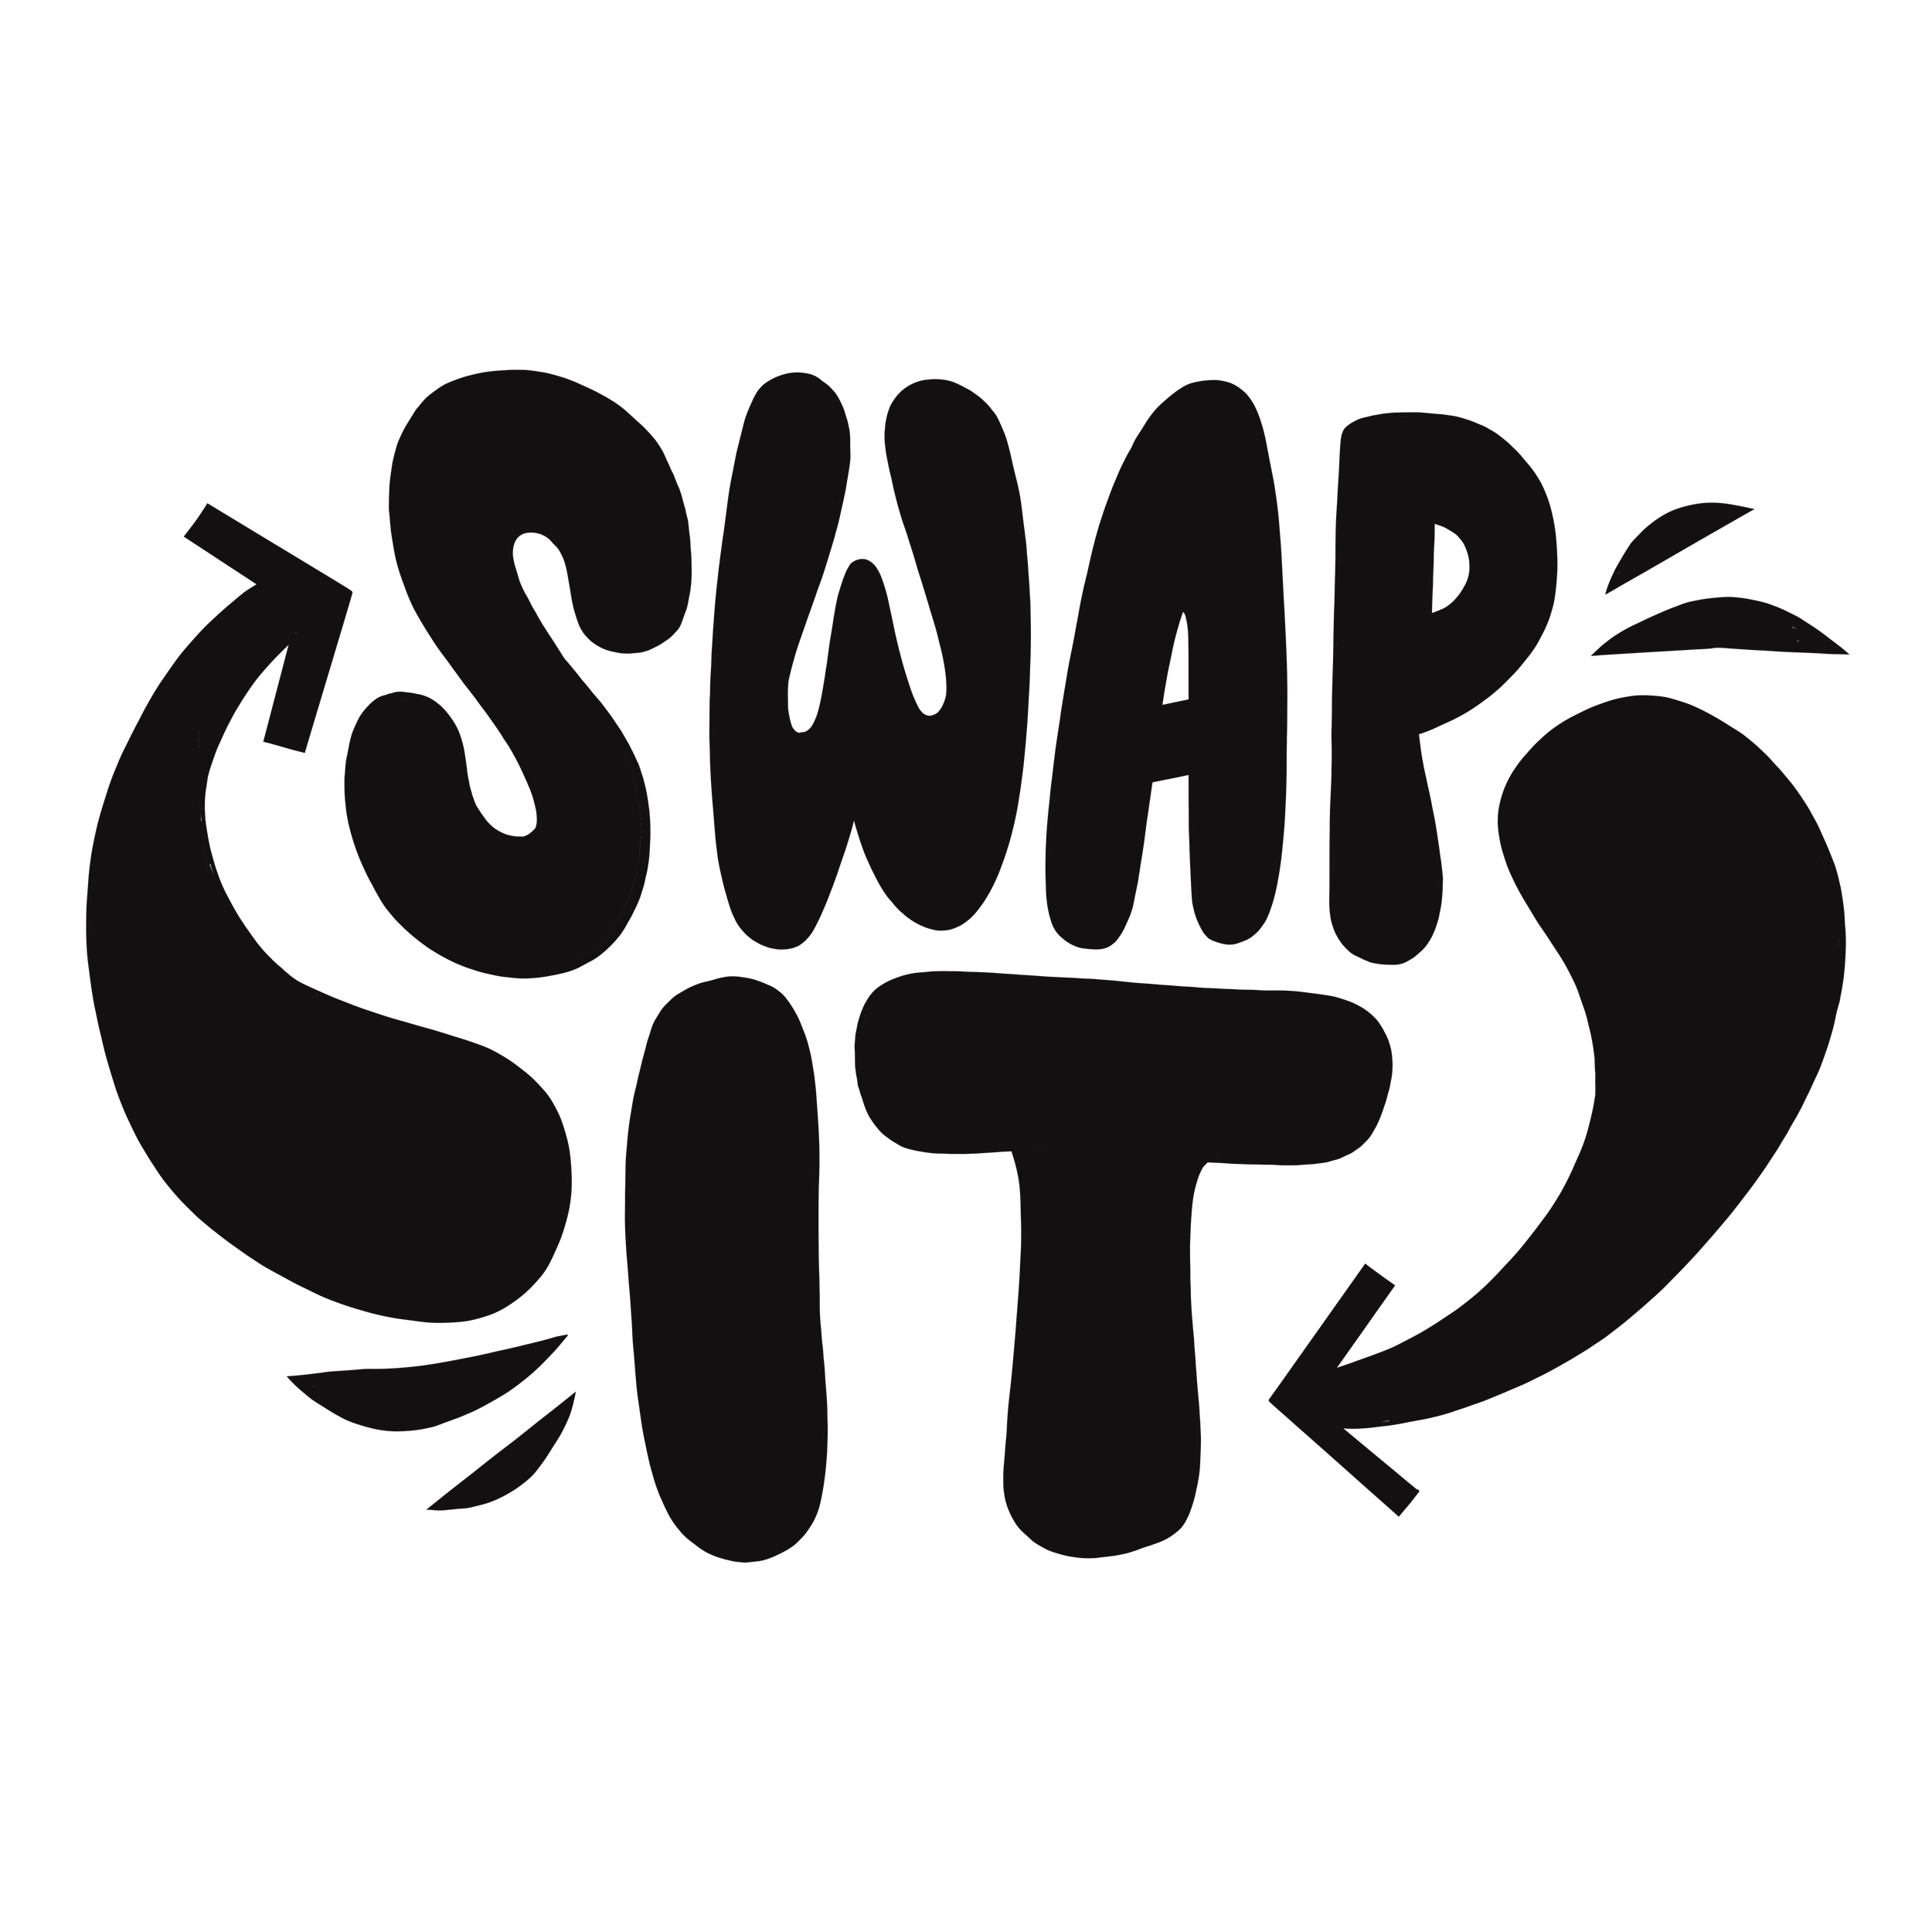 Swap_It.png